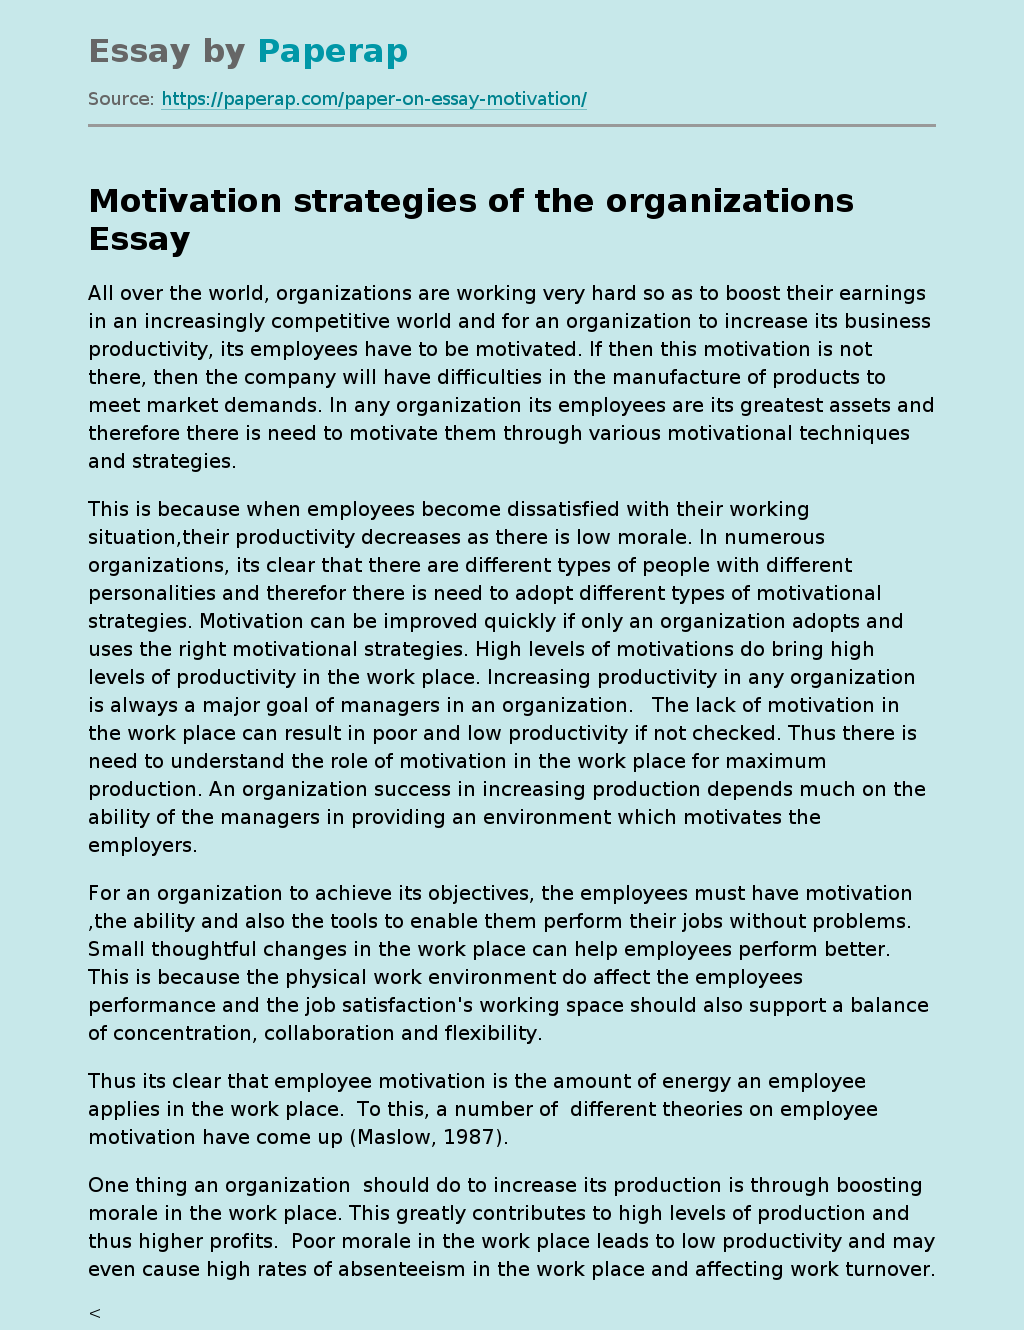 Motivation strategies of the organizations